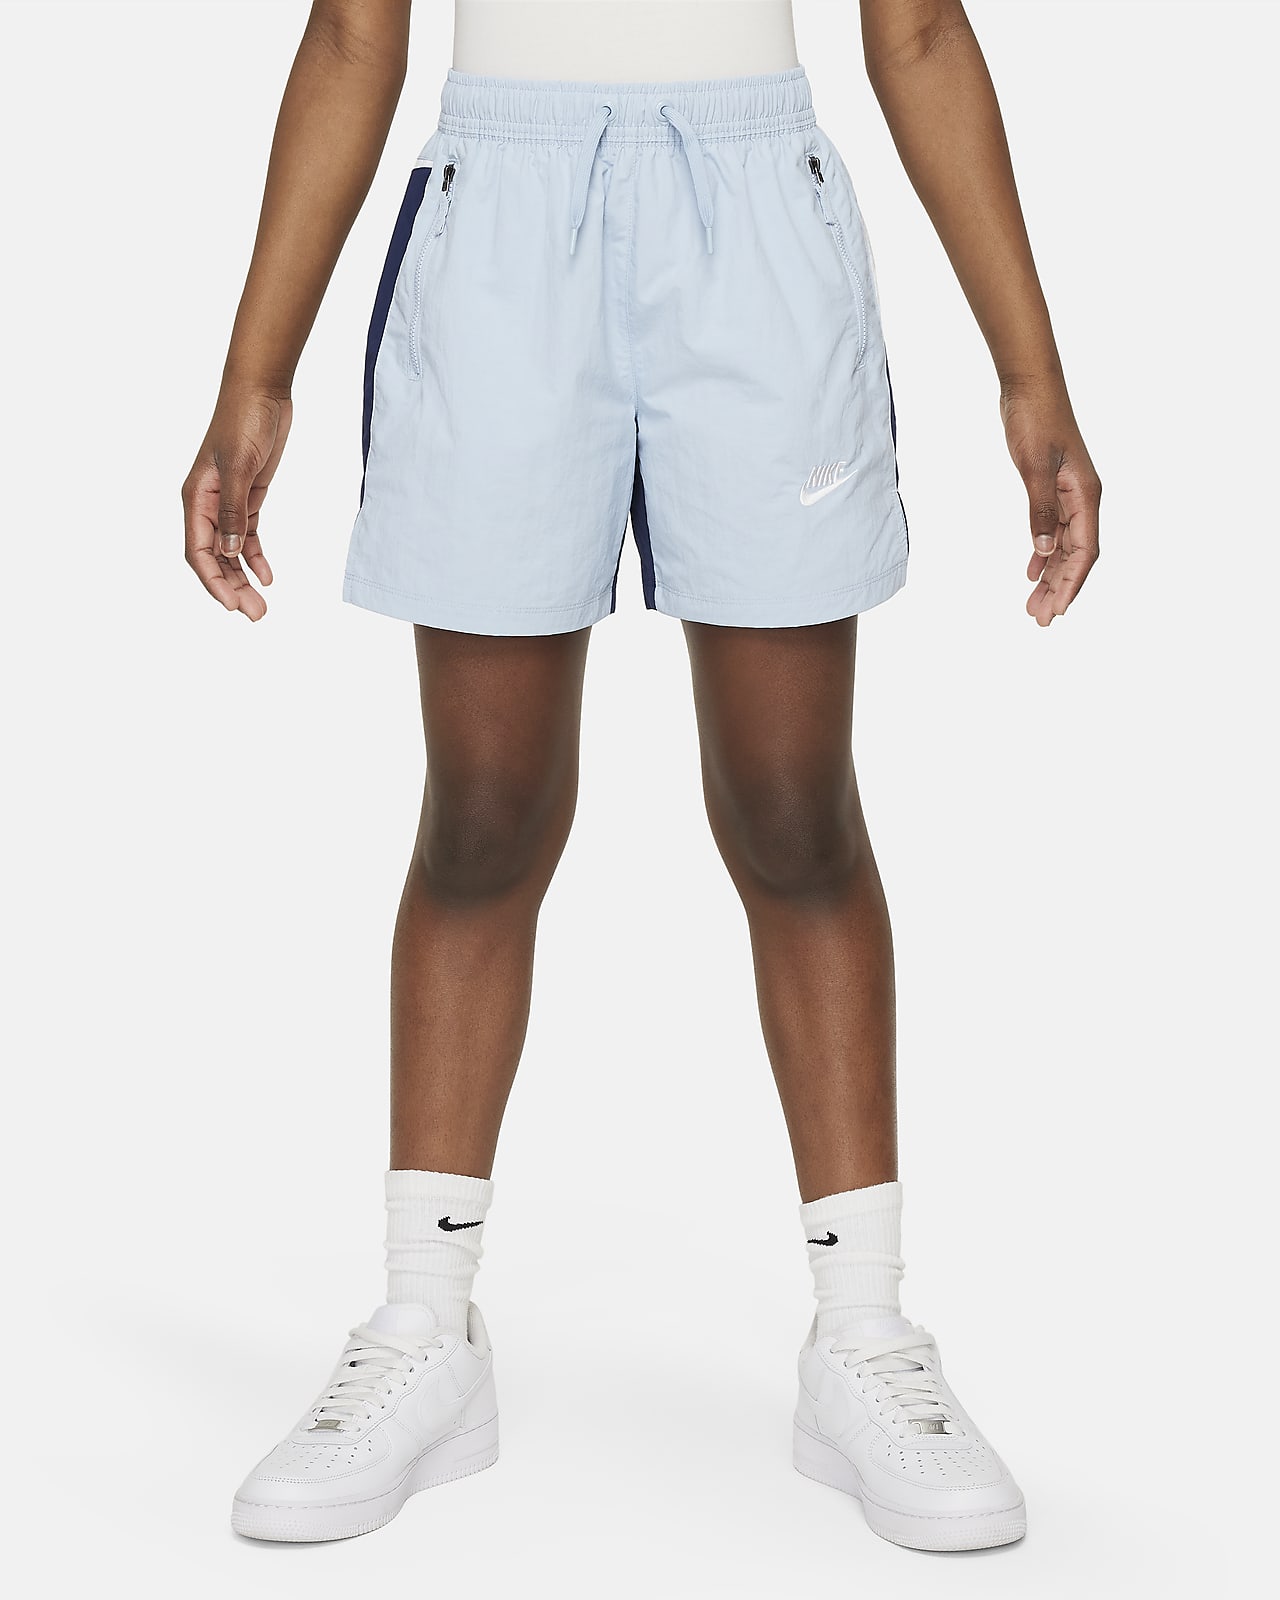 Shorts de tejido Woven para niños talla grande Nike Sportswear Amplify